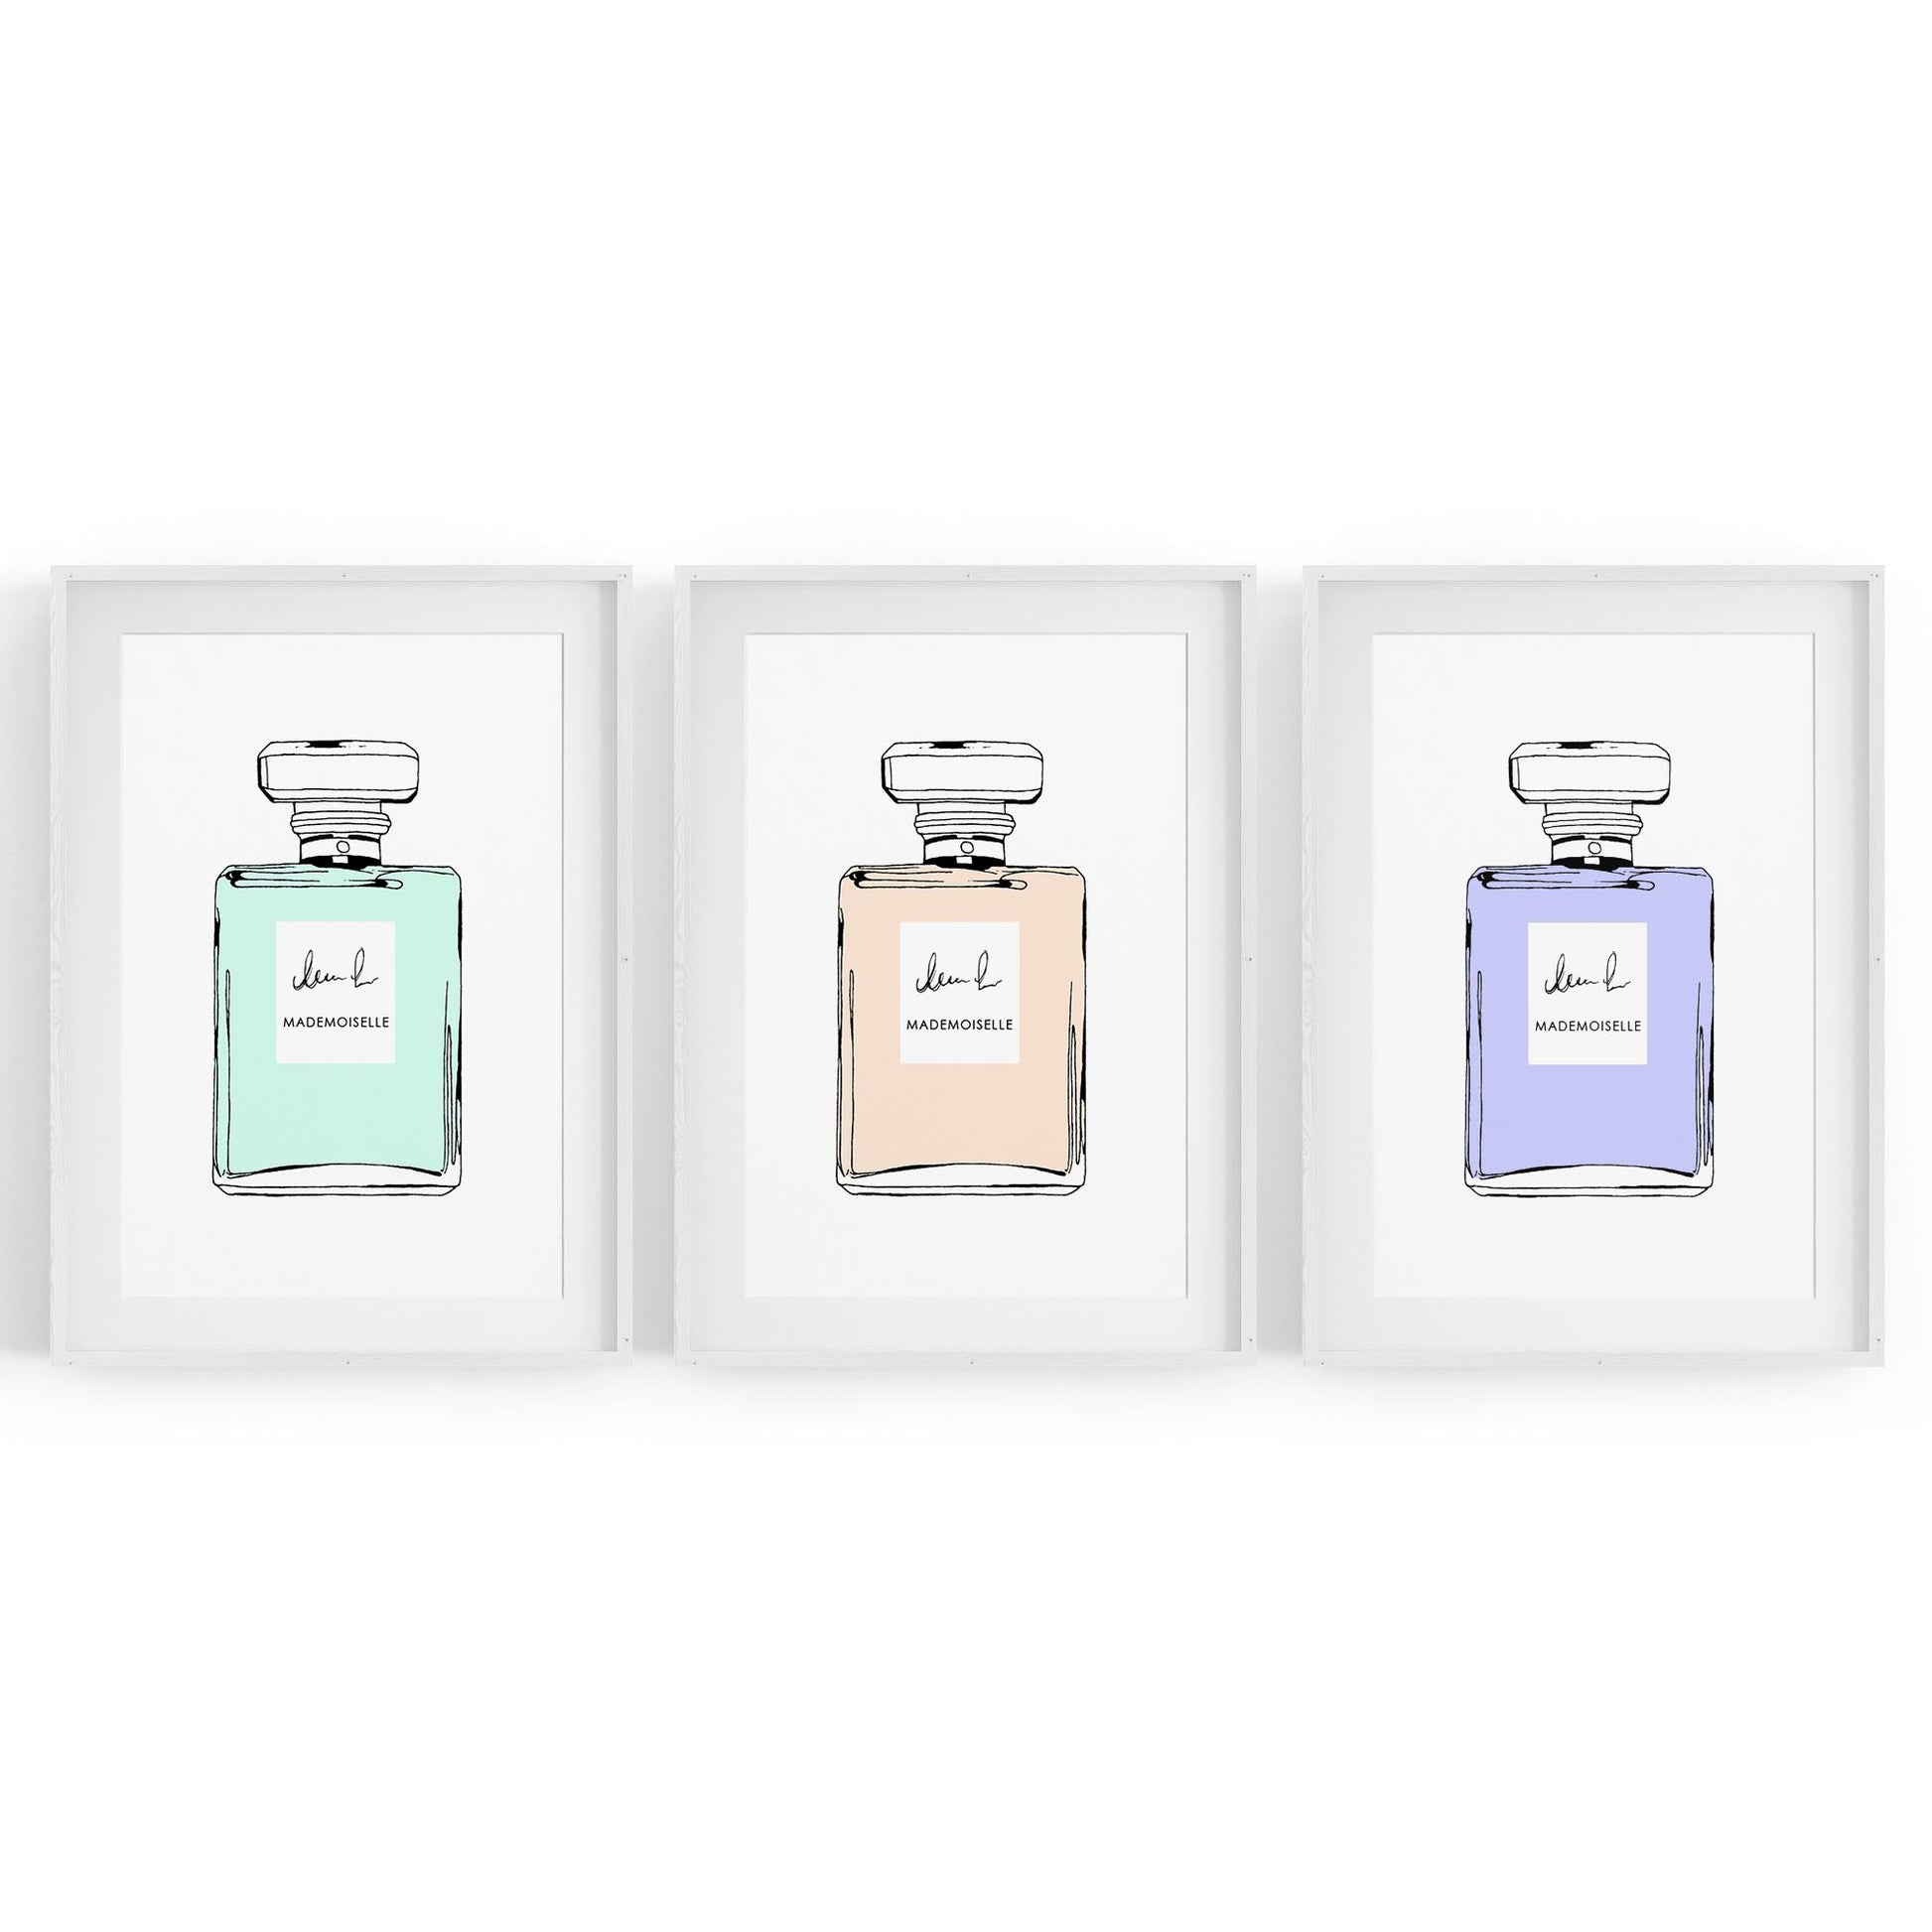 Set of Perfume Bottle Fashion Bedroom Wall Art #4 - The Affordable Art Company